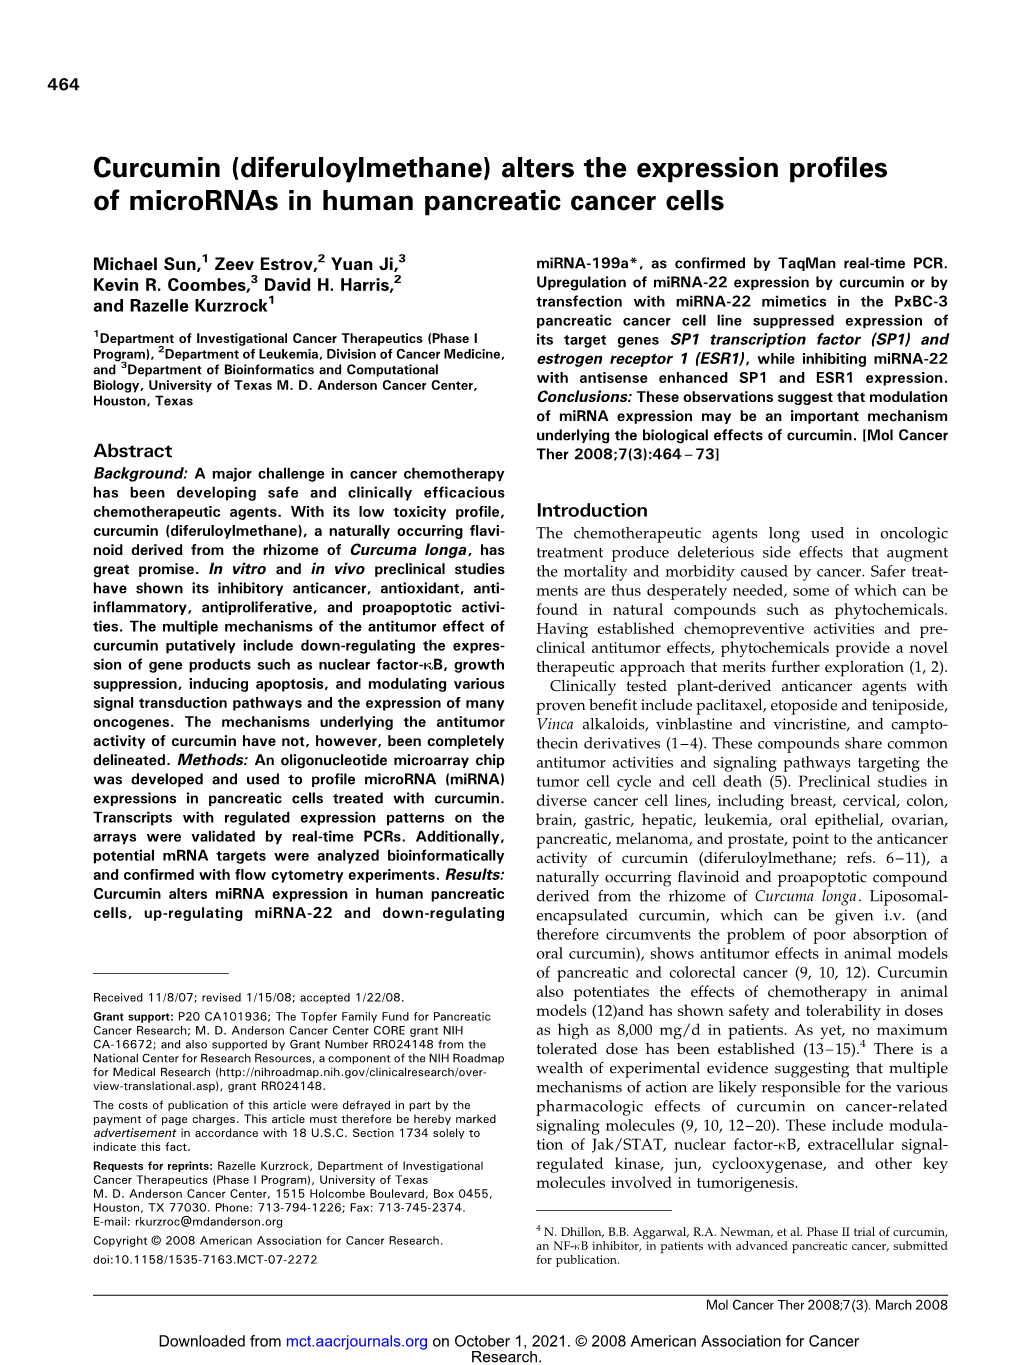 Curcumin (Diferuloylmethane) Alters the Expression Profiles of Micrornas in Human Pancreatic Cancer Cells